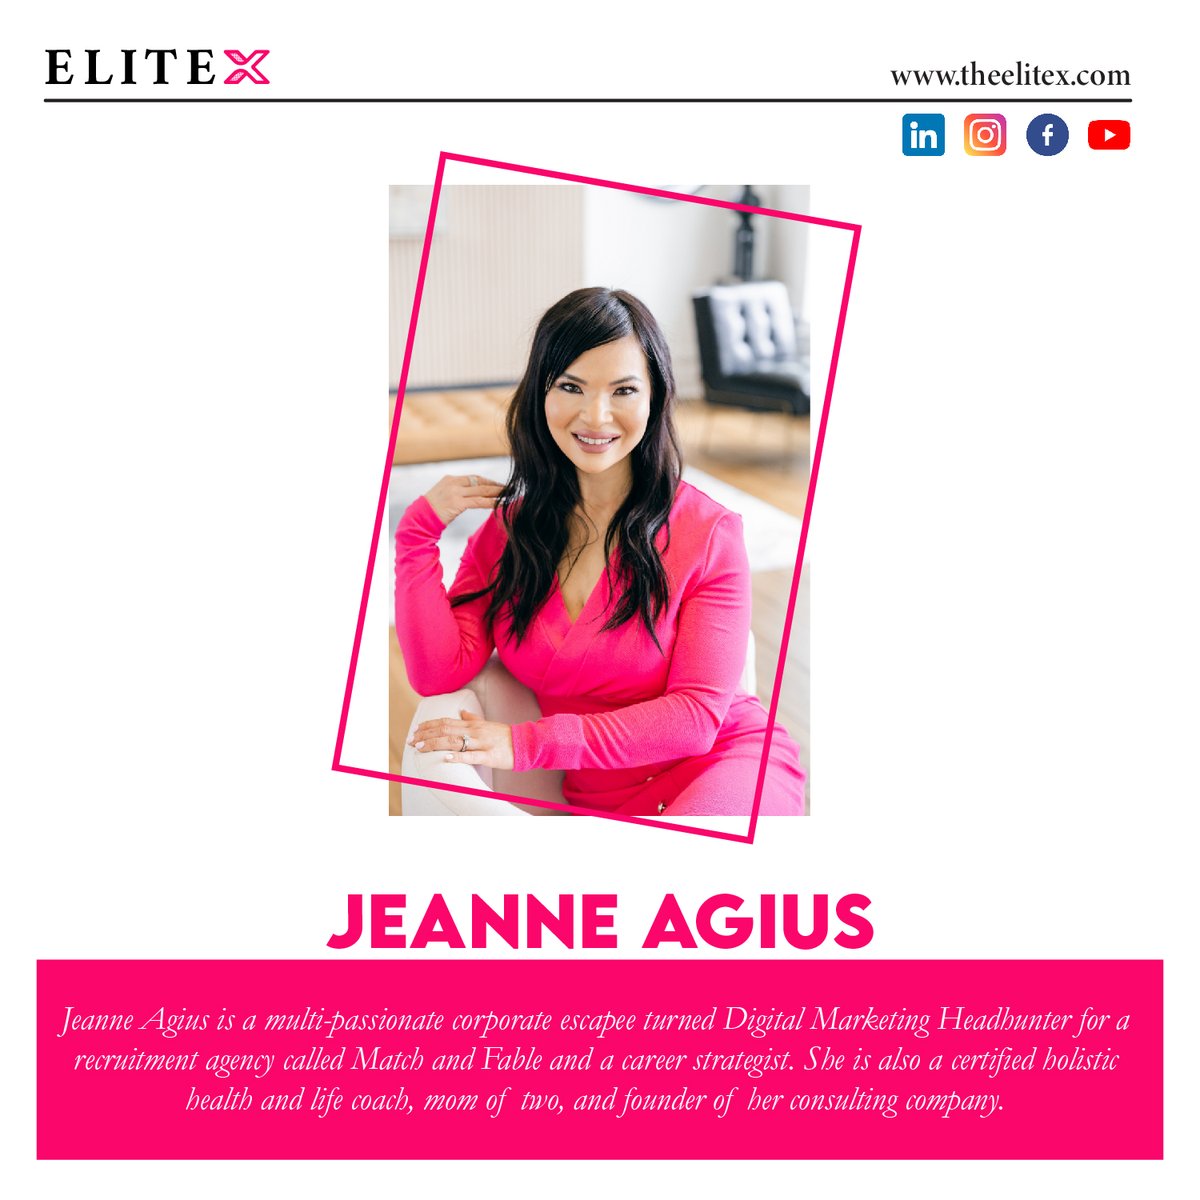 Jeanne Agius | Founder | Self-Care Journey Coaching
@AgiusJeanne @agius_jeanne 

Link: theelitex.com/tips-for-achie…

#elitex #MAGAZINE #digitaalmagazine #businessmagazine #WomenInBusiness #femfounder #coach #selfcarecoach #Growth #Mindset #profesionaldevelopment #businesswomen